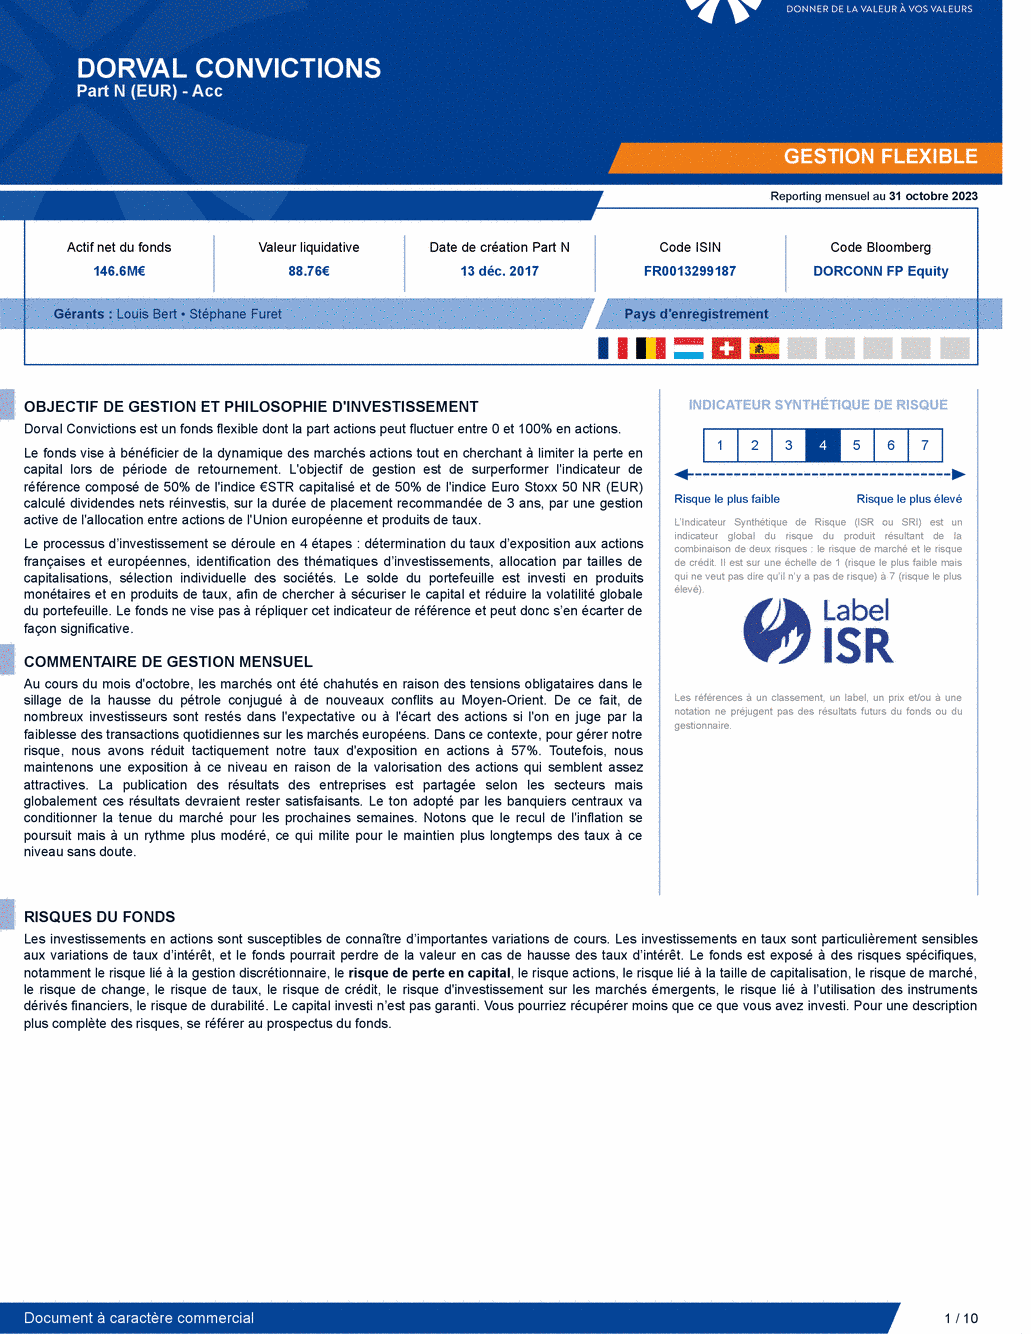 Reporting DORVAL CONVICTIONS N - 31/10/2023 - Français